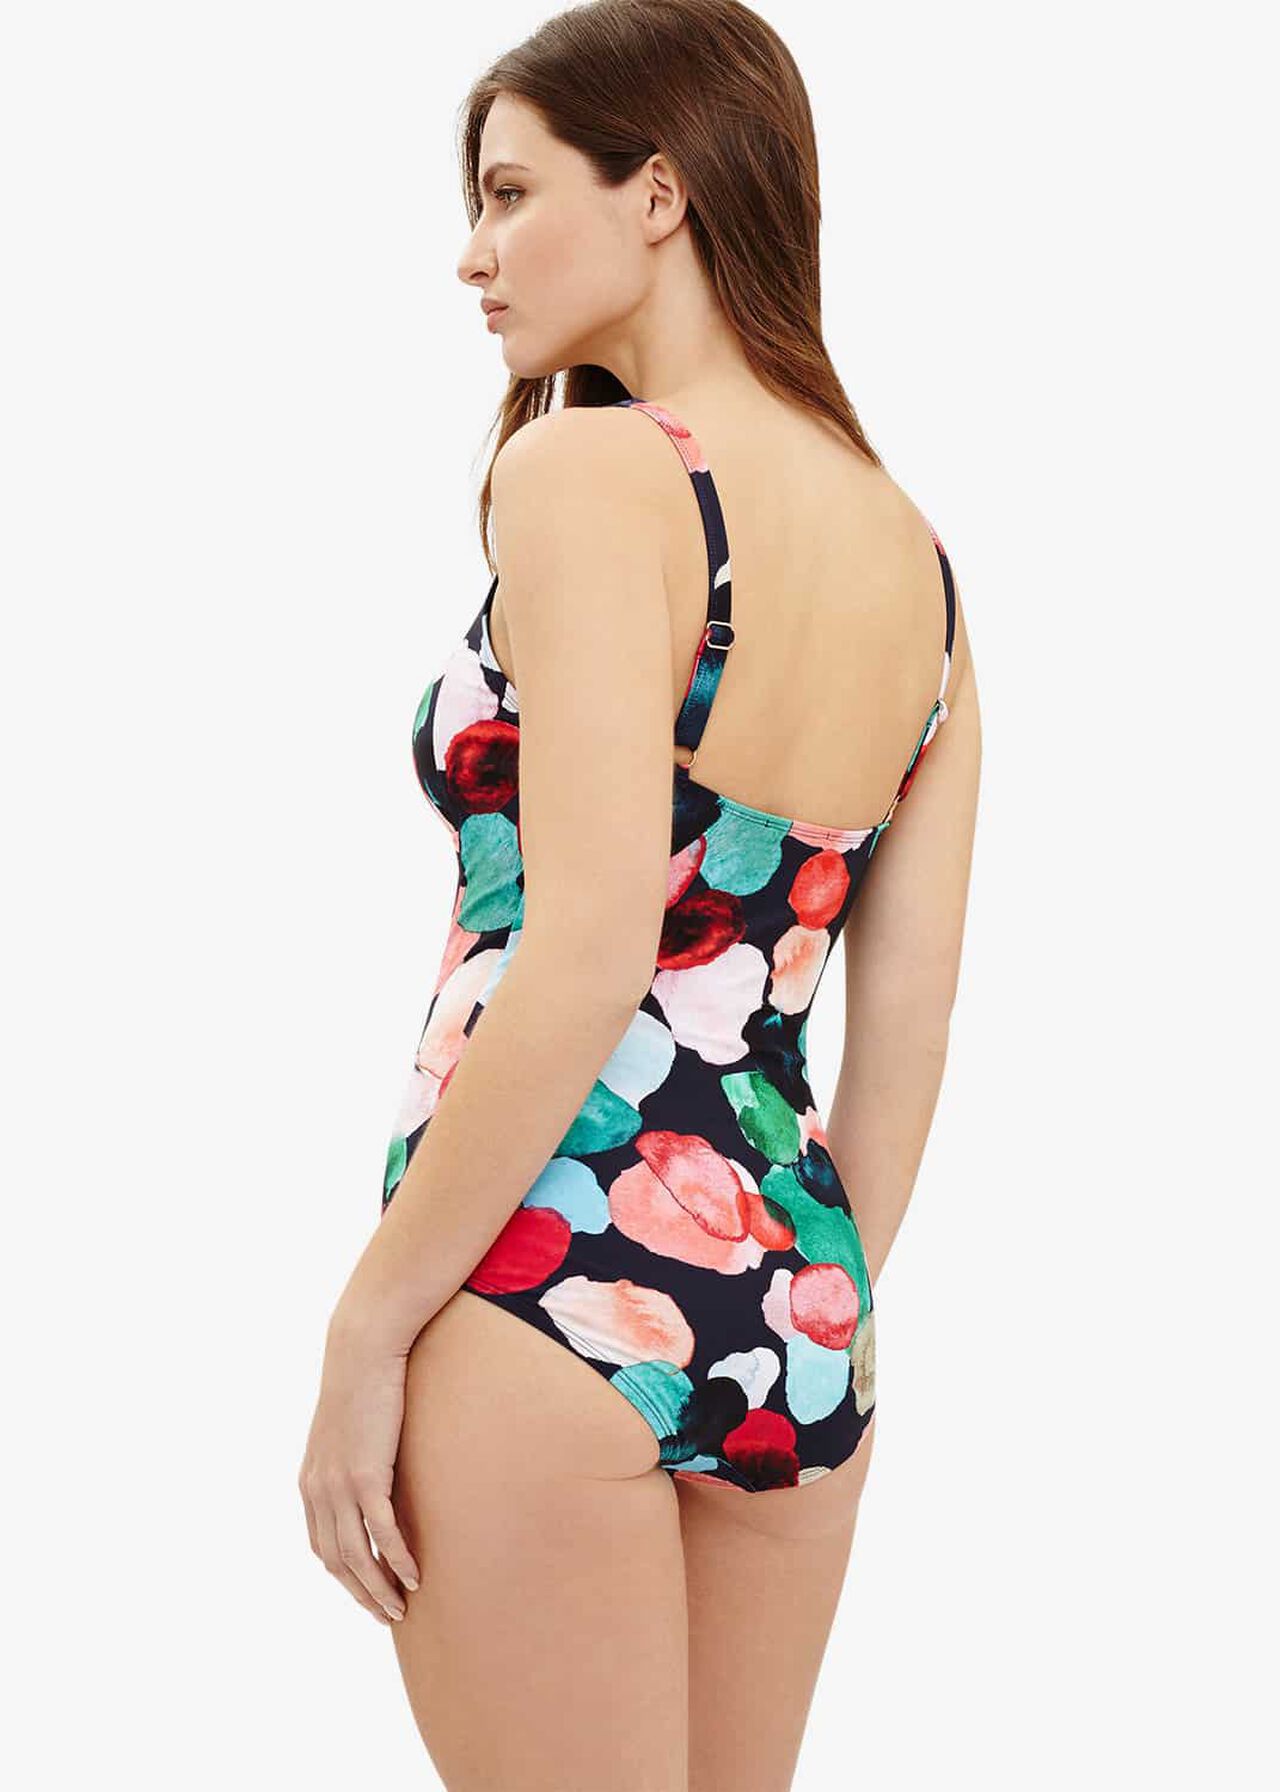 Artist Palette Spot Print Swimsuit